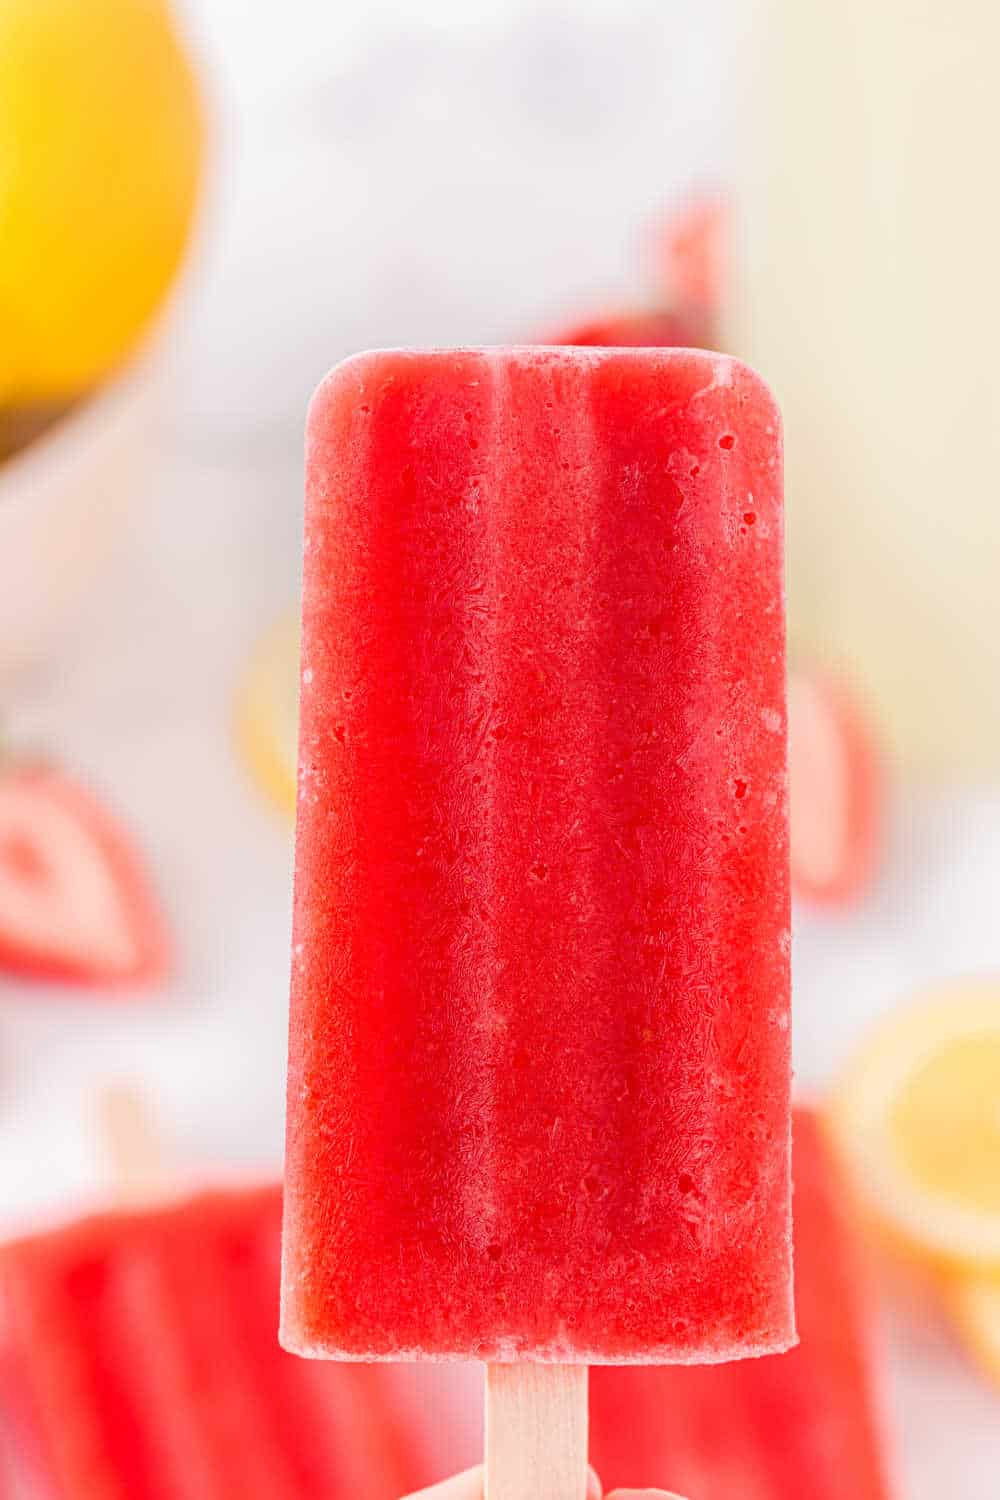 A single strawberry lemonade popsicle.